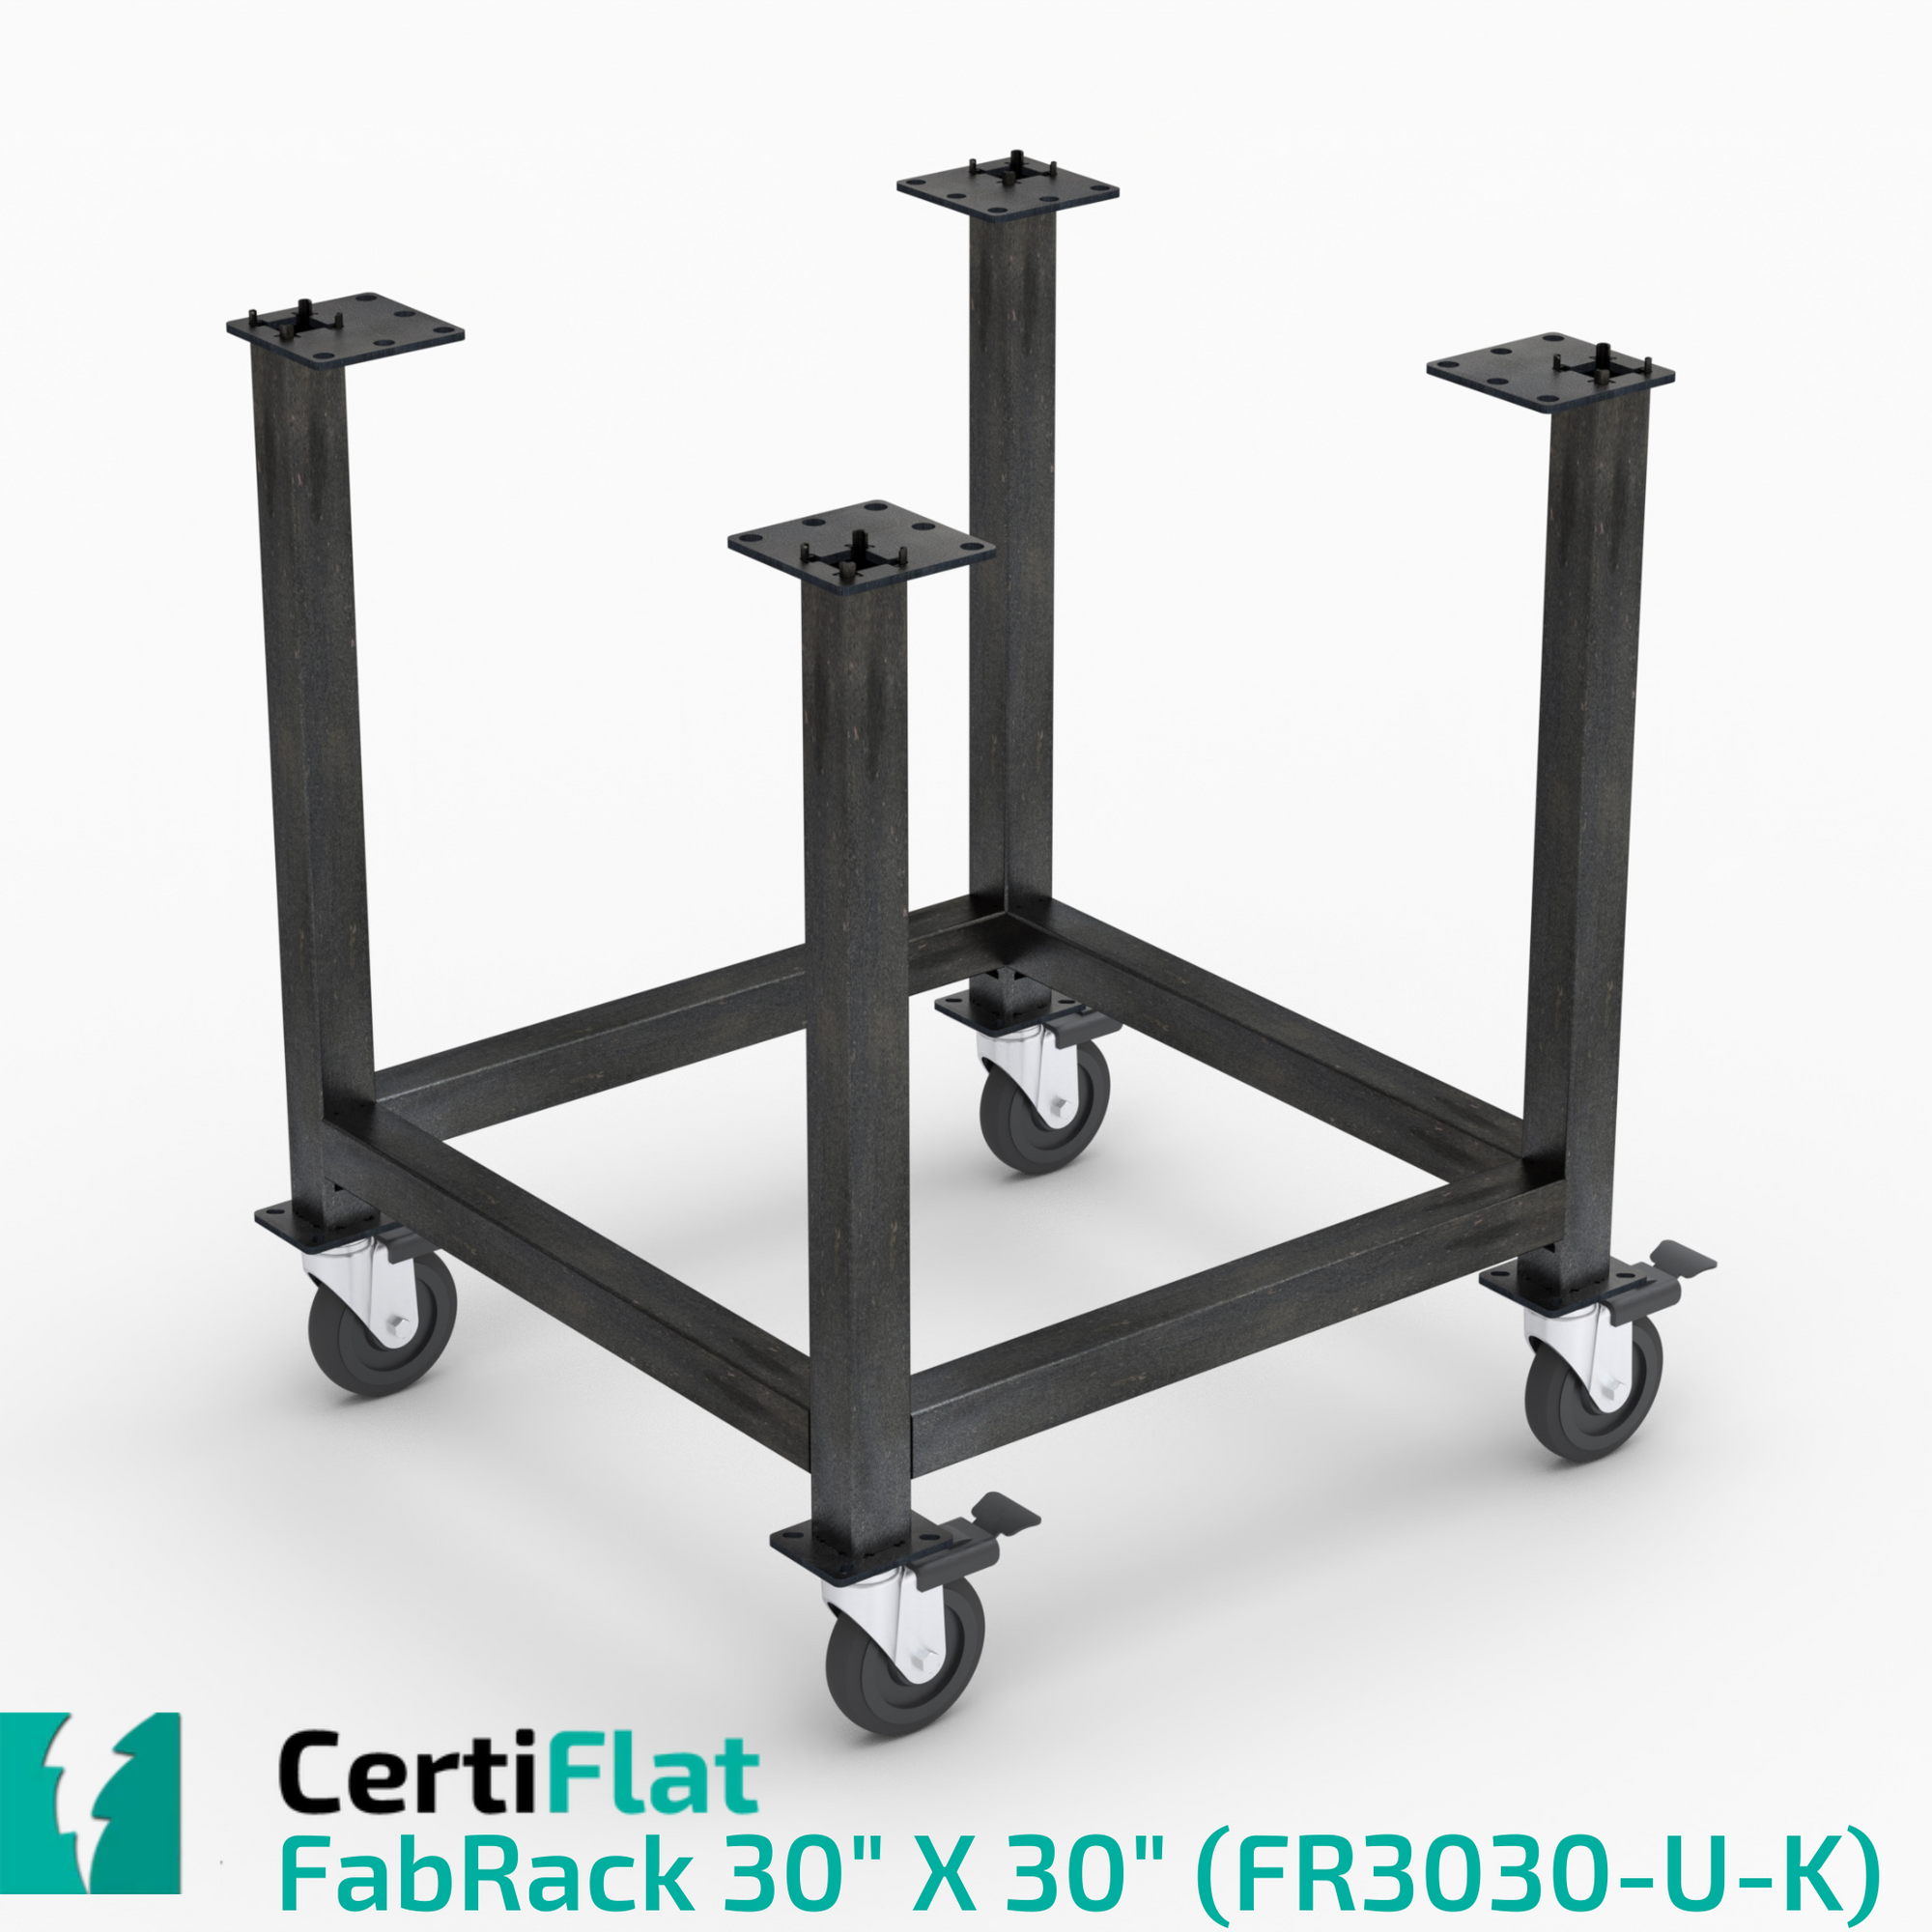 CertiFlat FabBlock Kit with casters - FR3030-U-K, 30"X30" FabRack CNC Tube Laser Leg Kit For FabBlocks